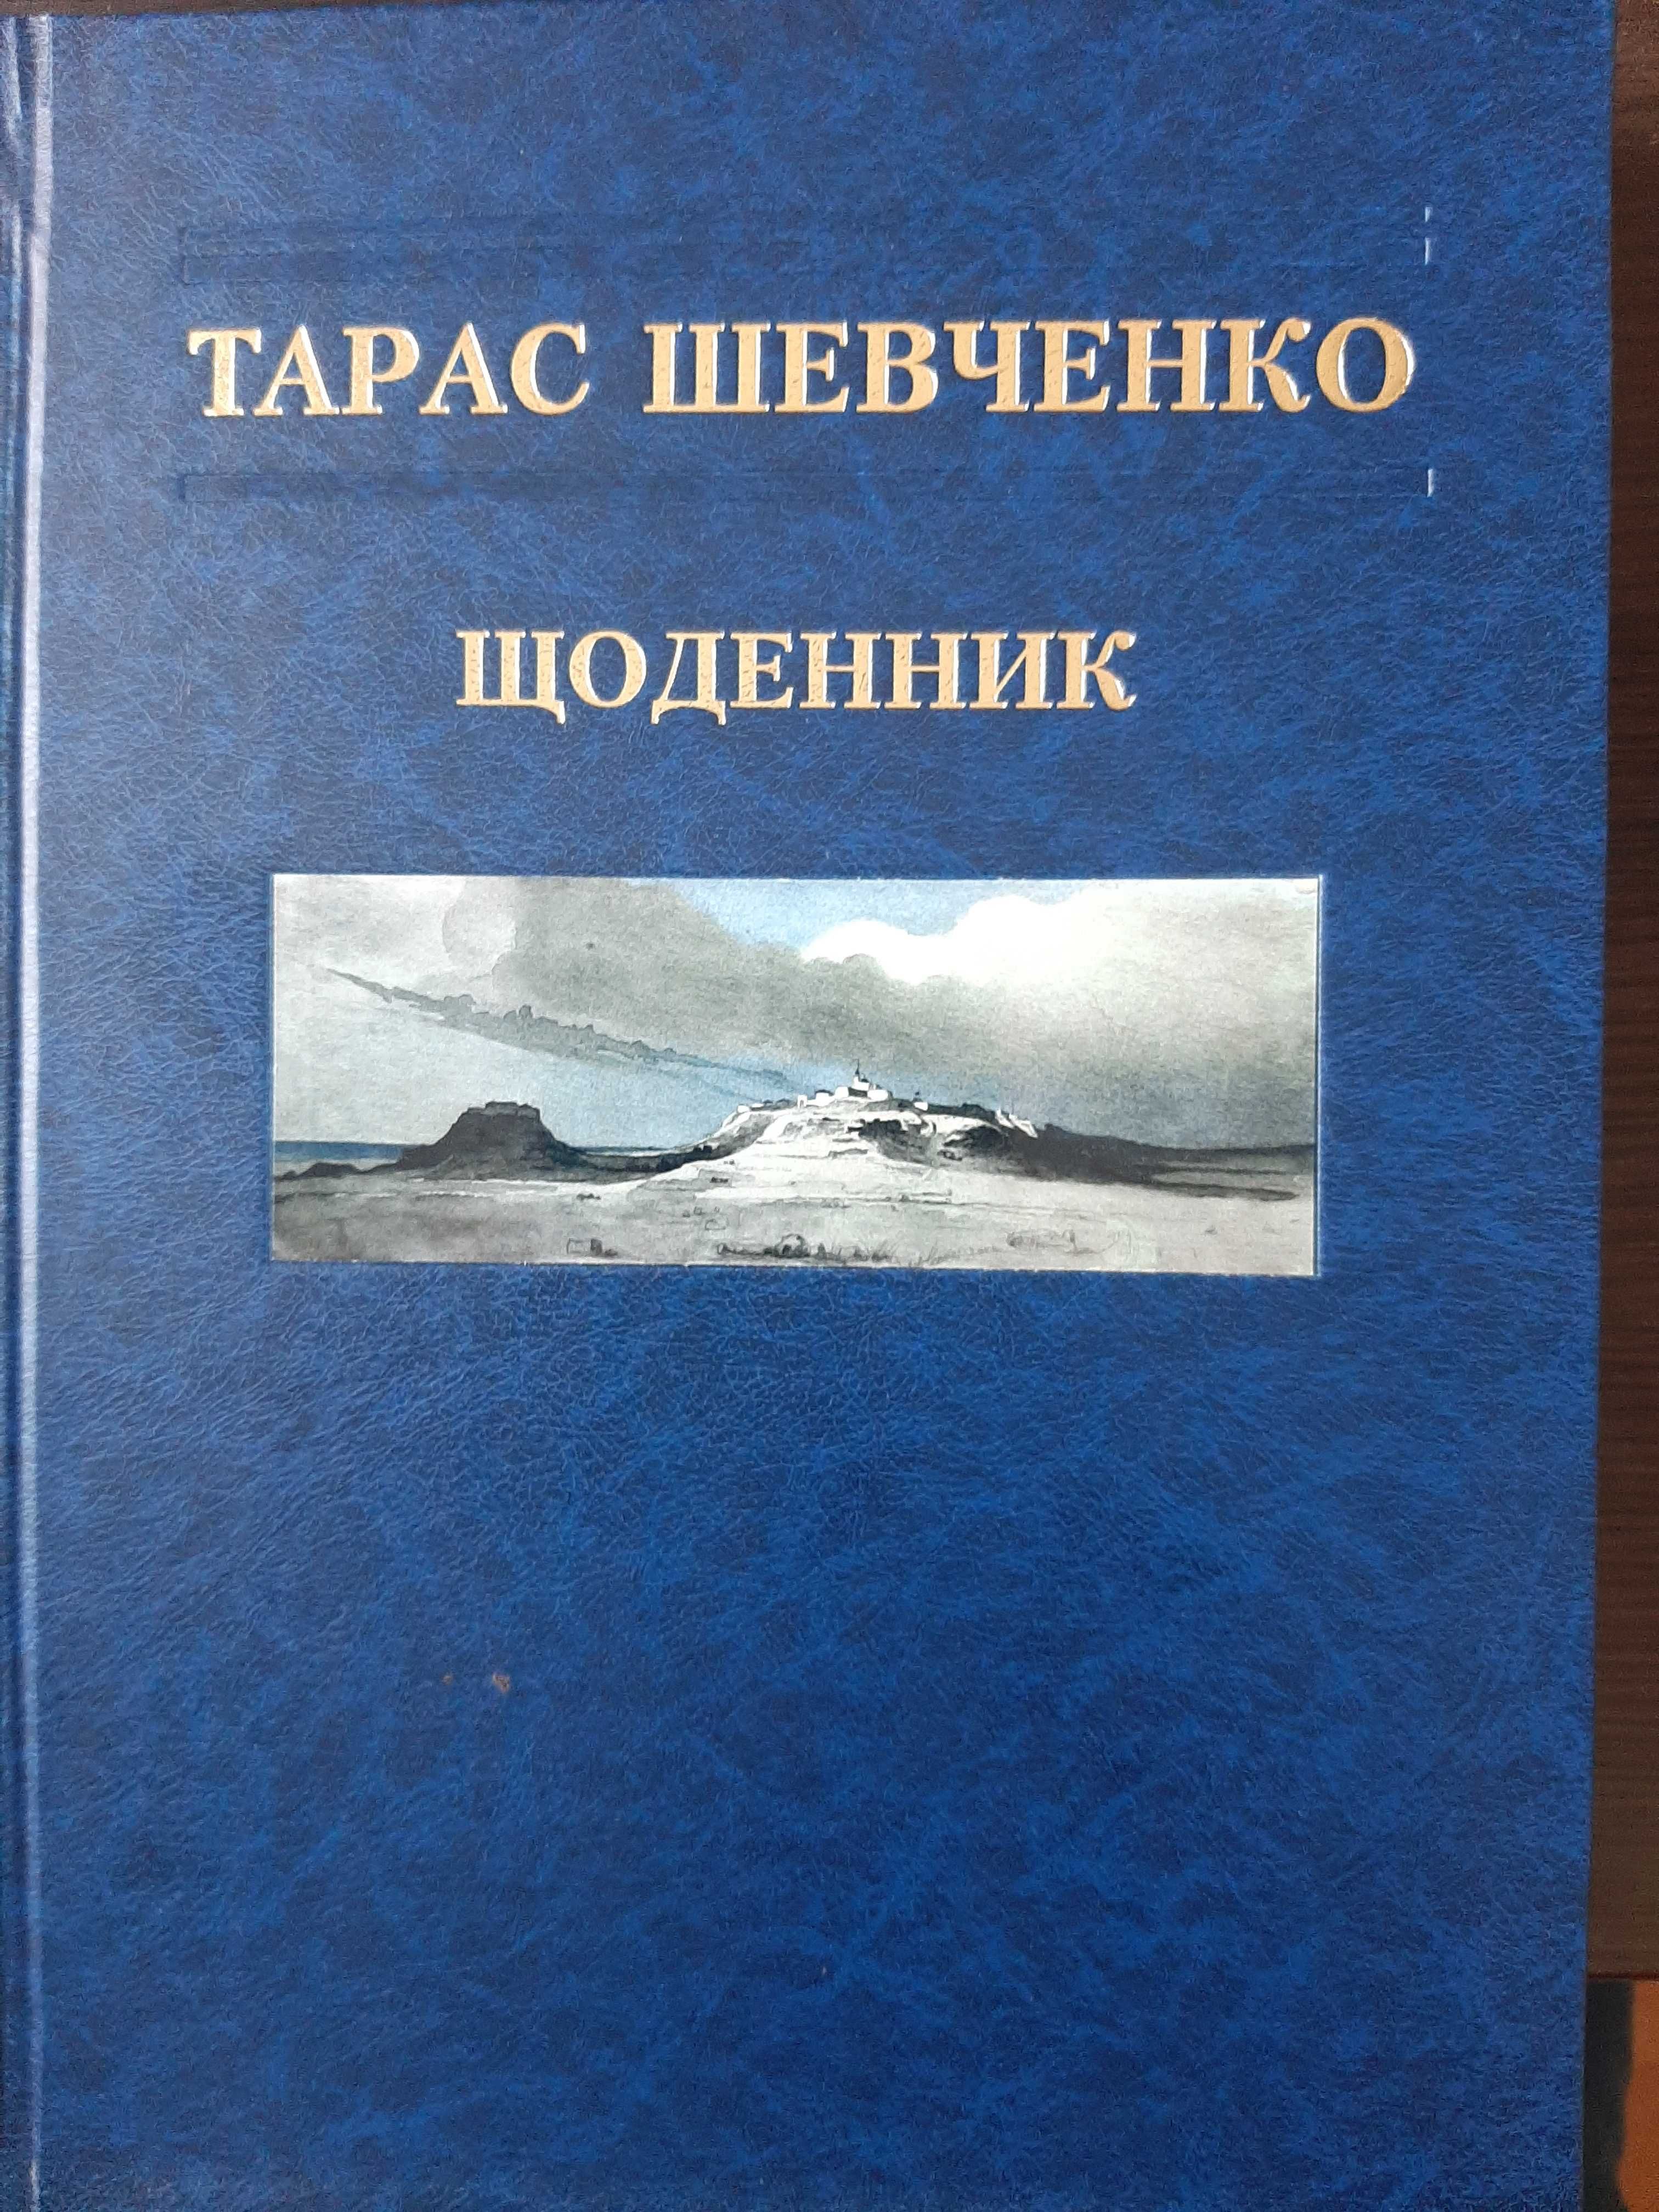 Книга "Тарас Шевченко "Щоденник"